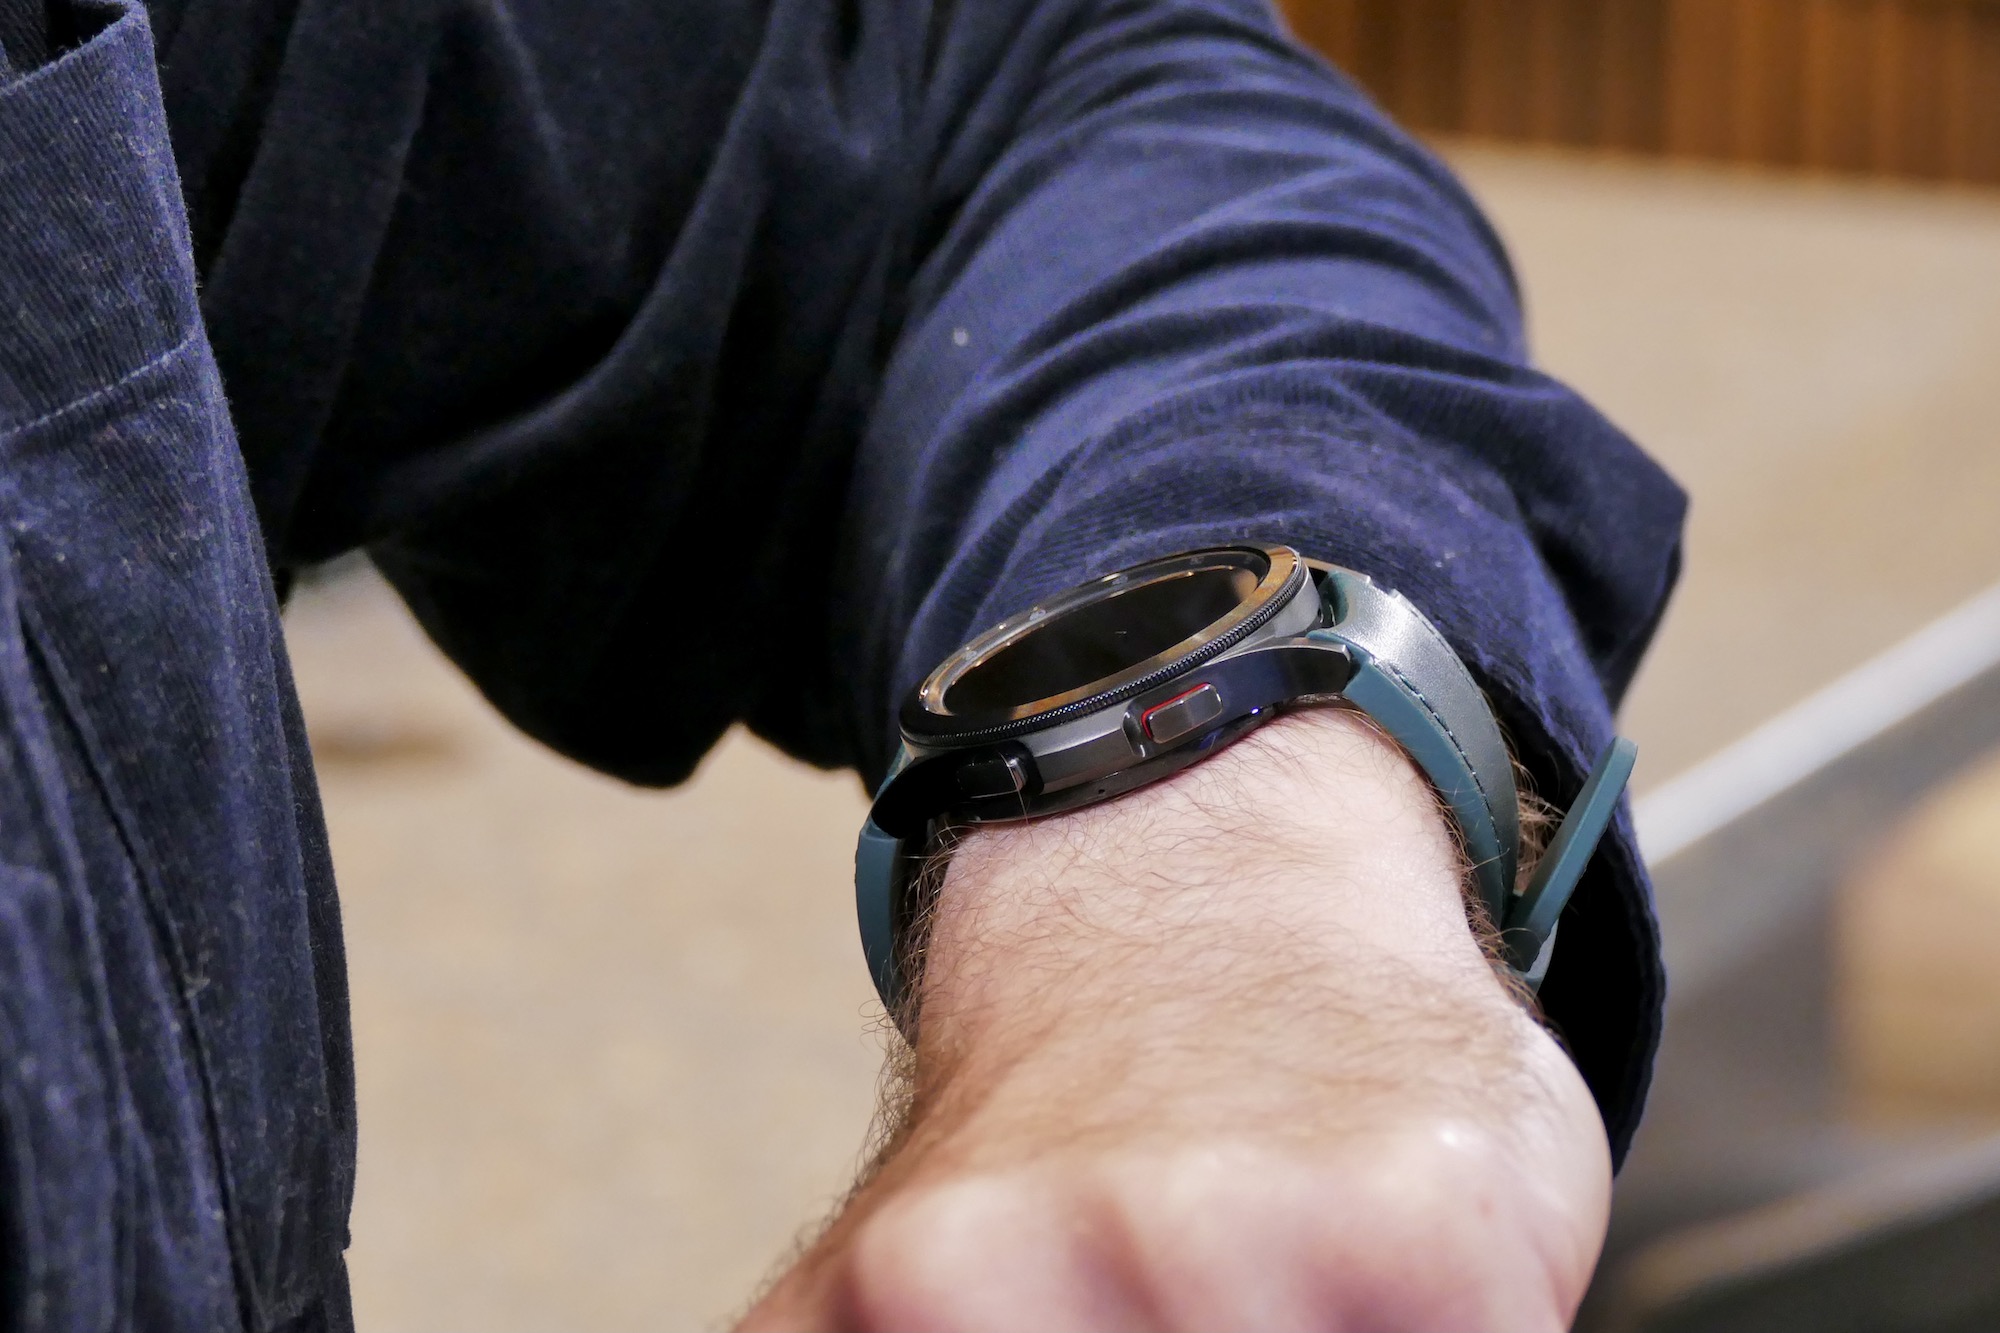 Galaxy Watch 4 Classic worn on the wrist.